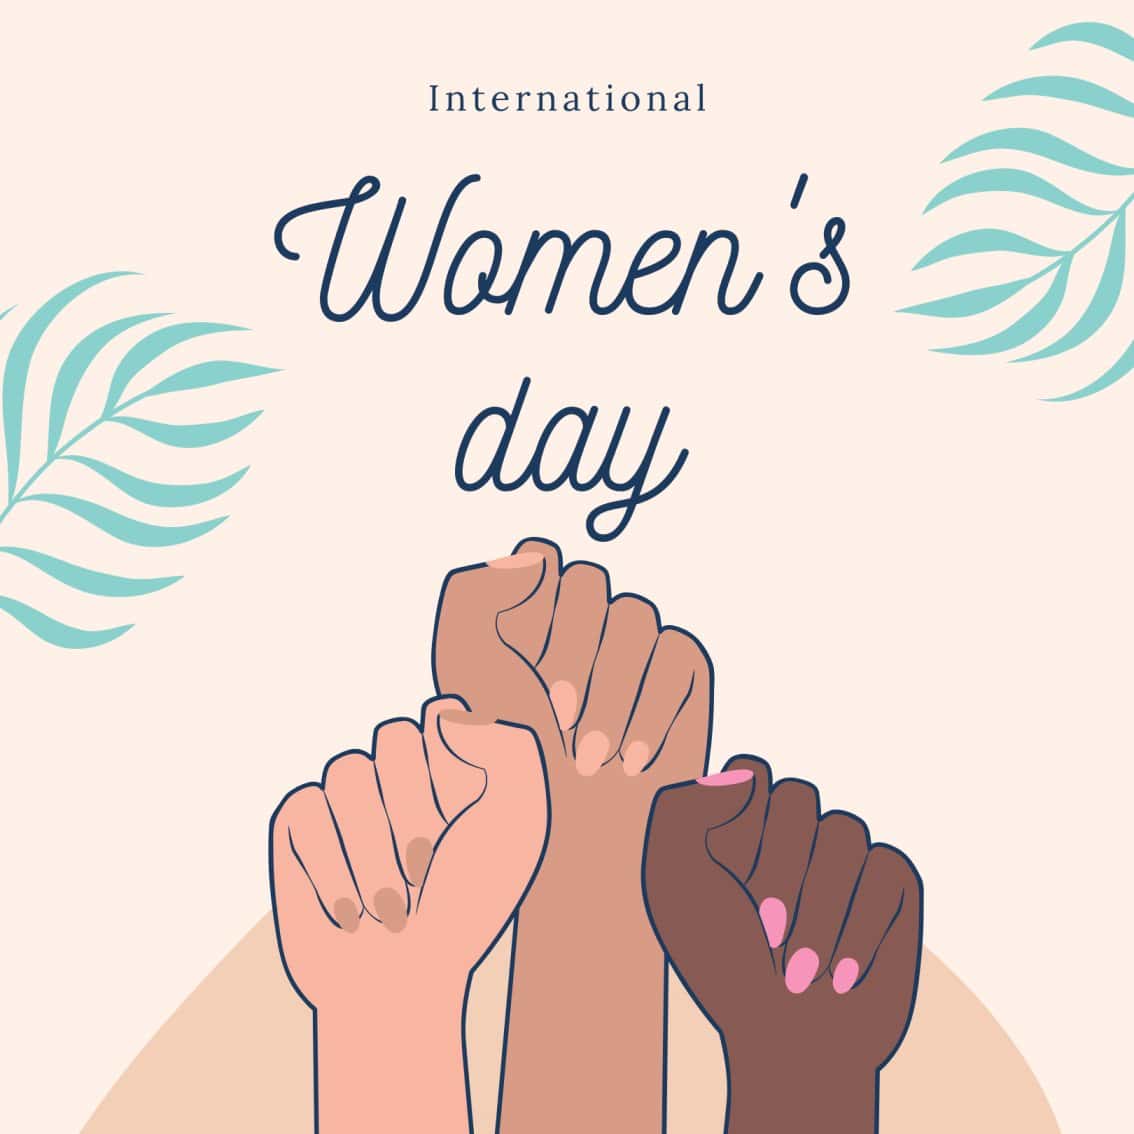 graphic image representing international women's day